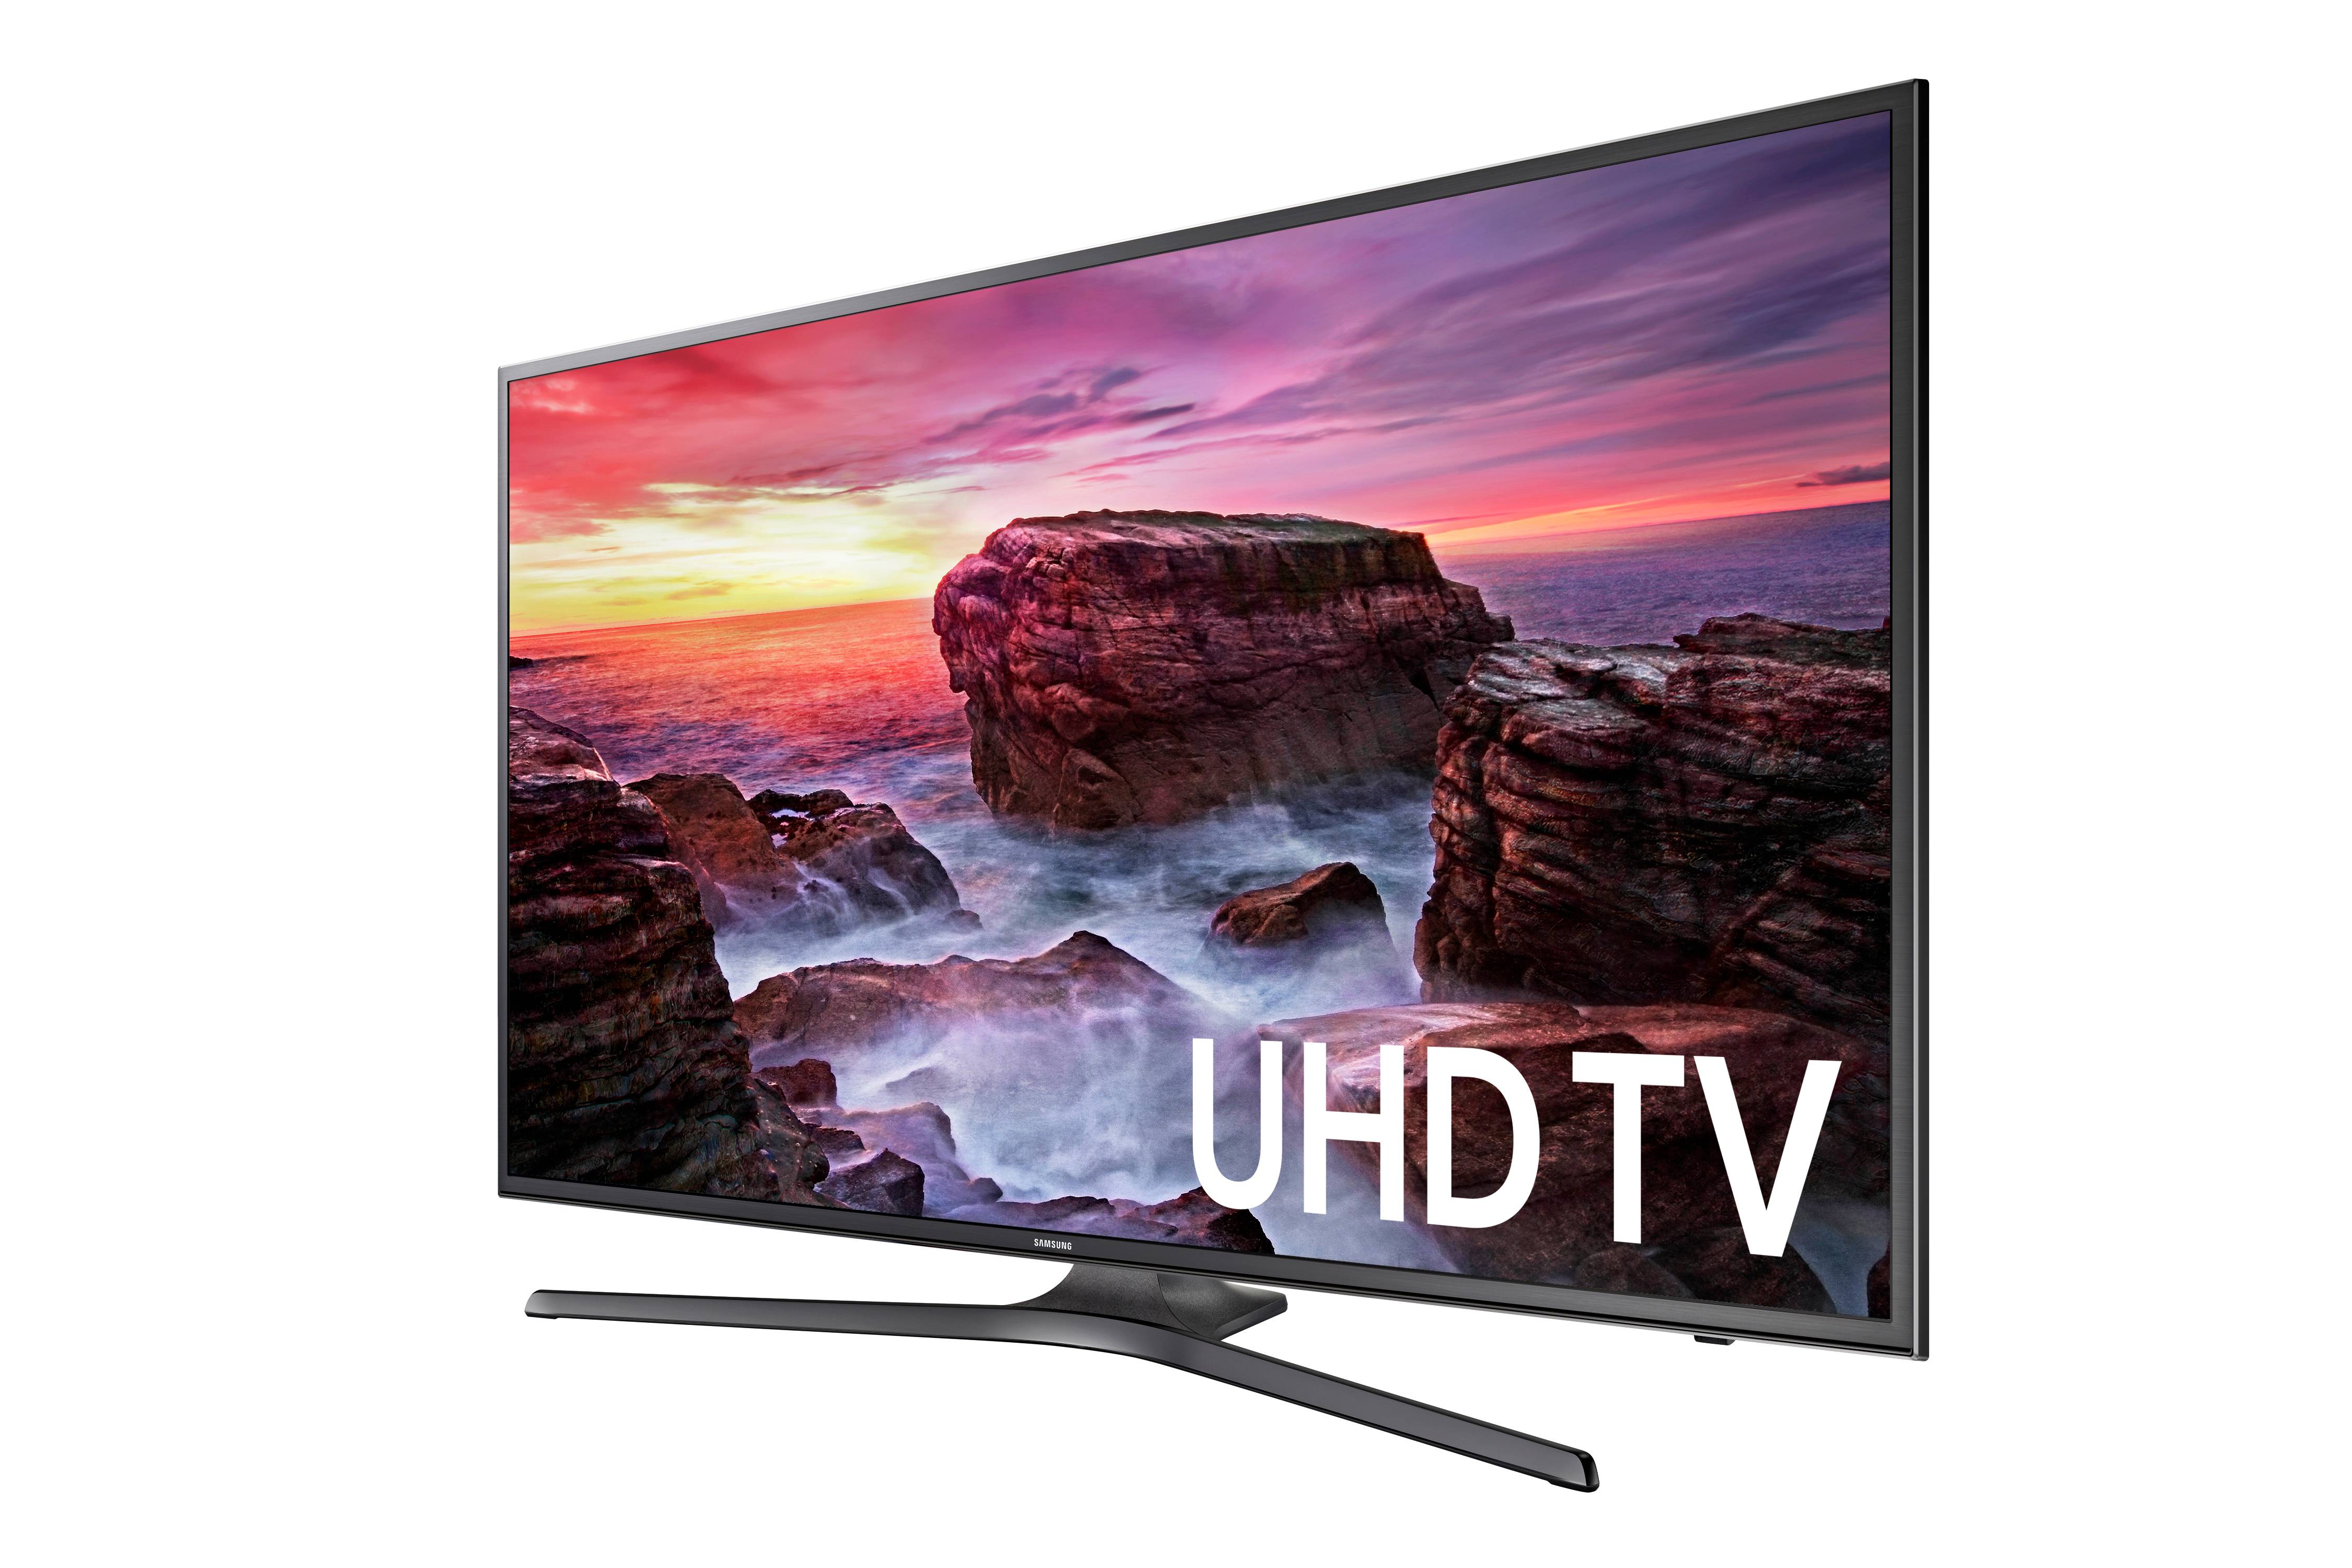 Samsung 43" Class 4K (2160P) Smart LED TV (UN43MU6300) - image 3 of 8